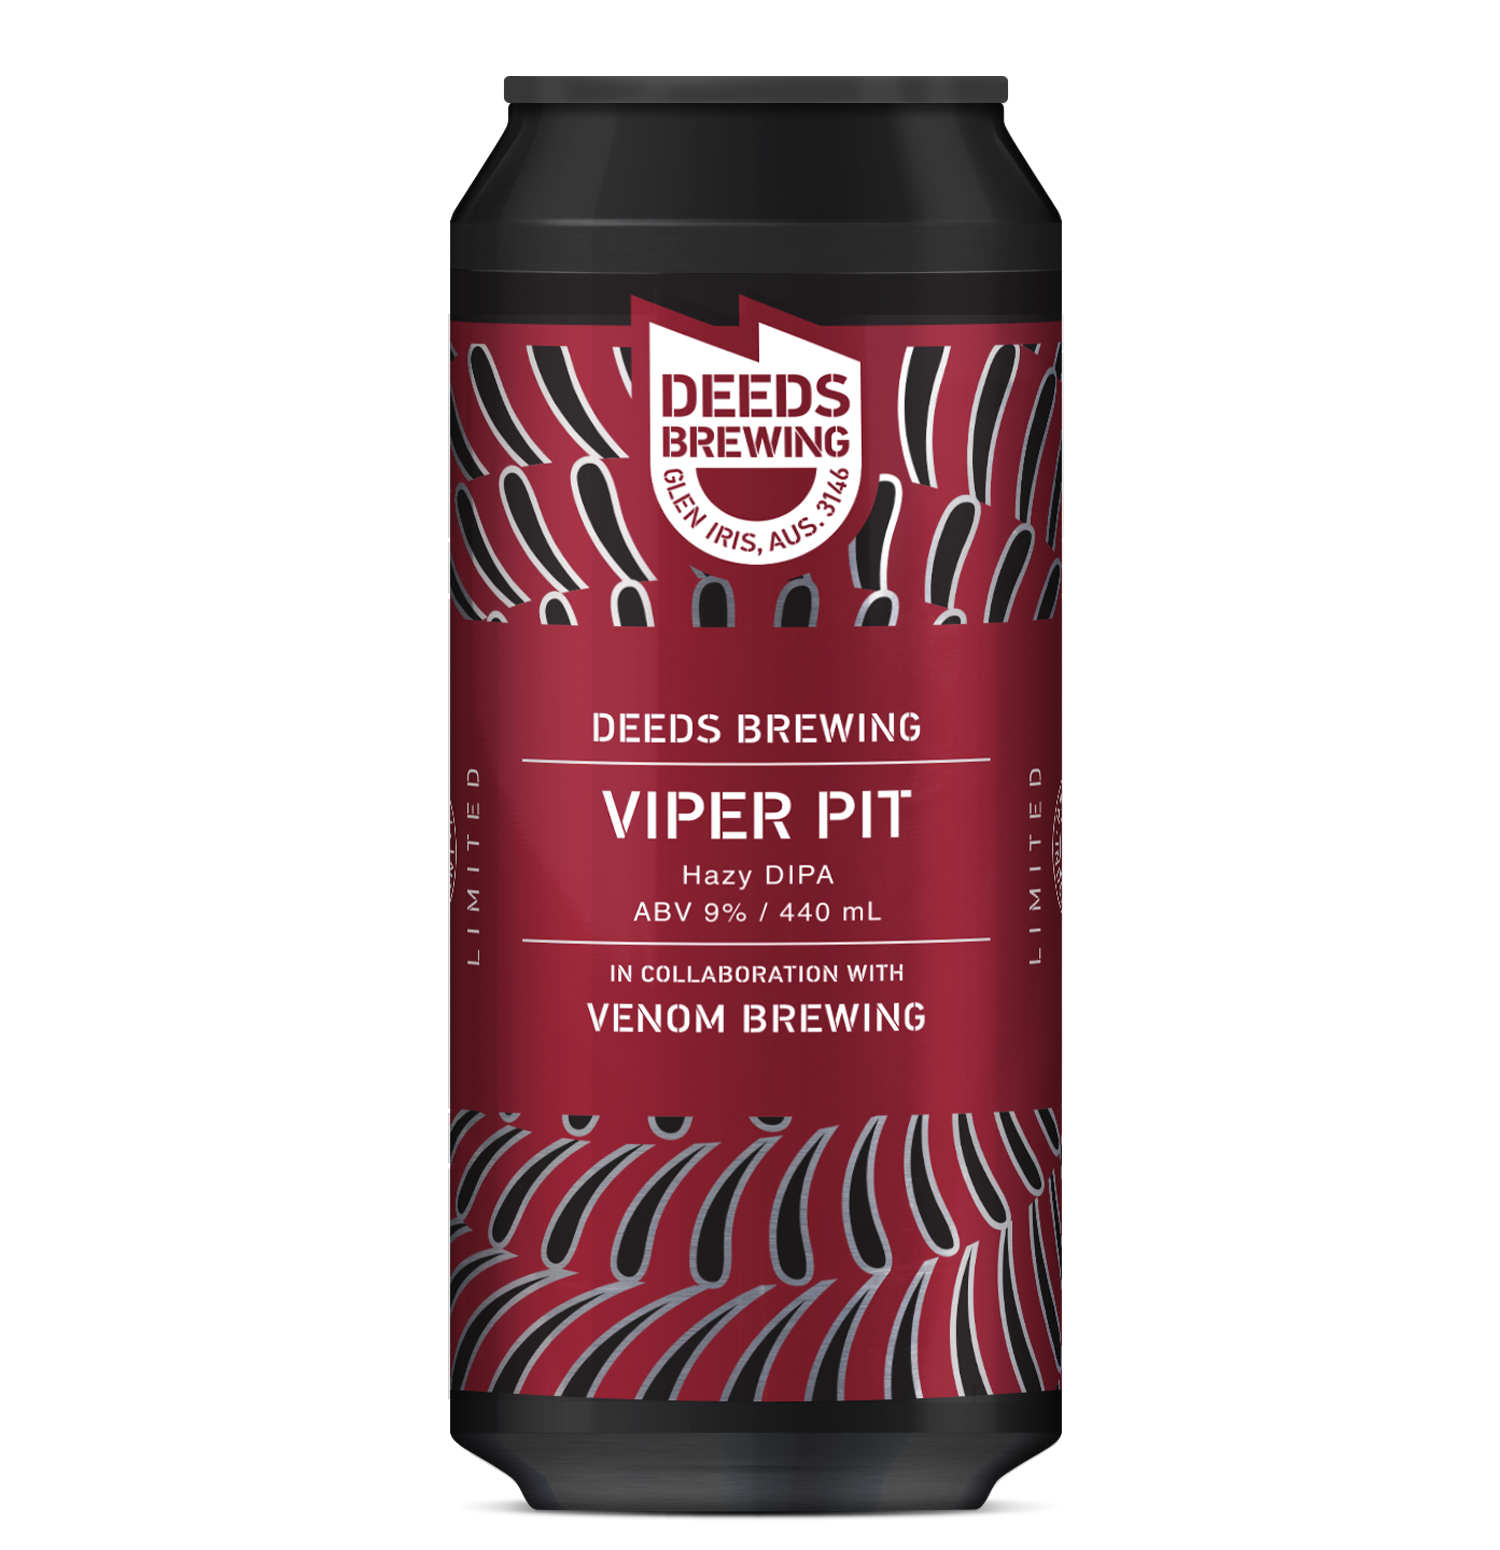 Viper Pit